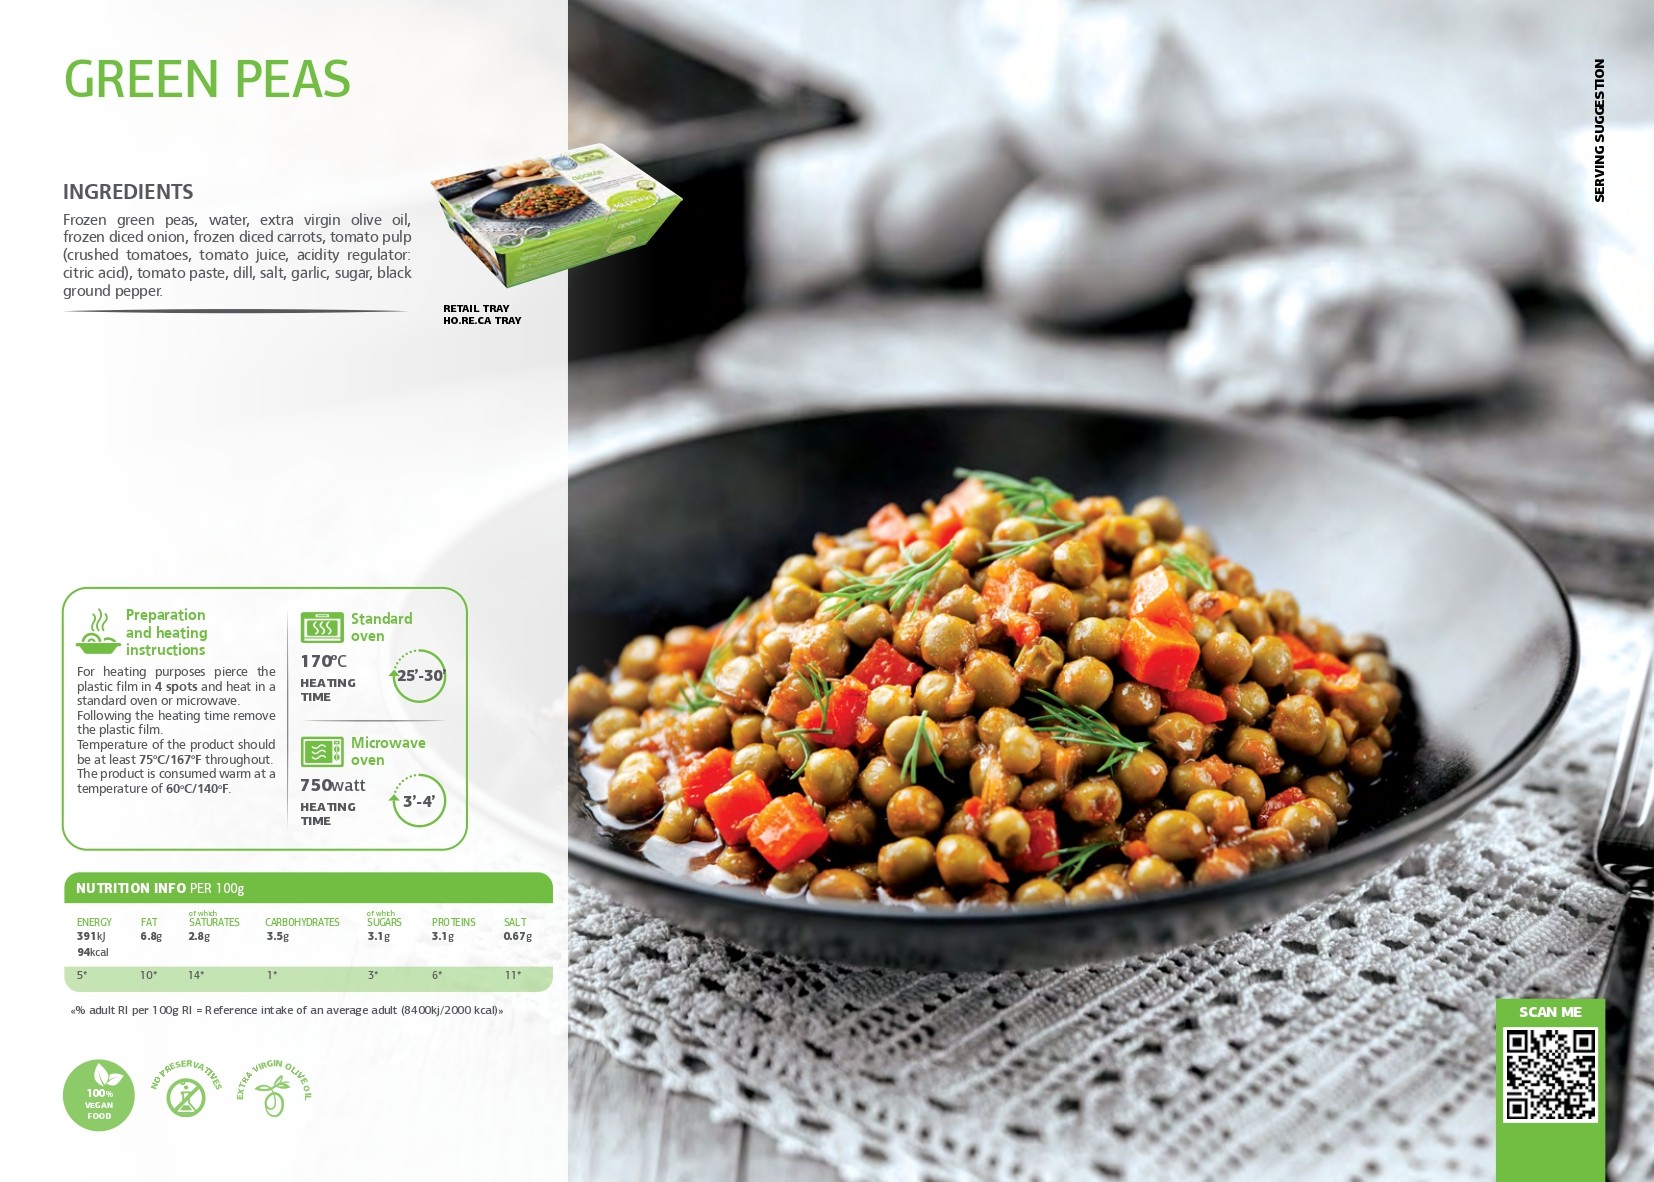 SK - Green peas pdf image